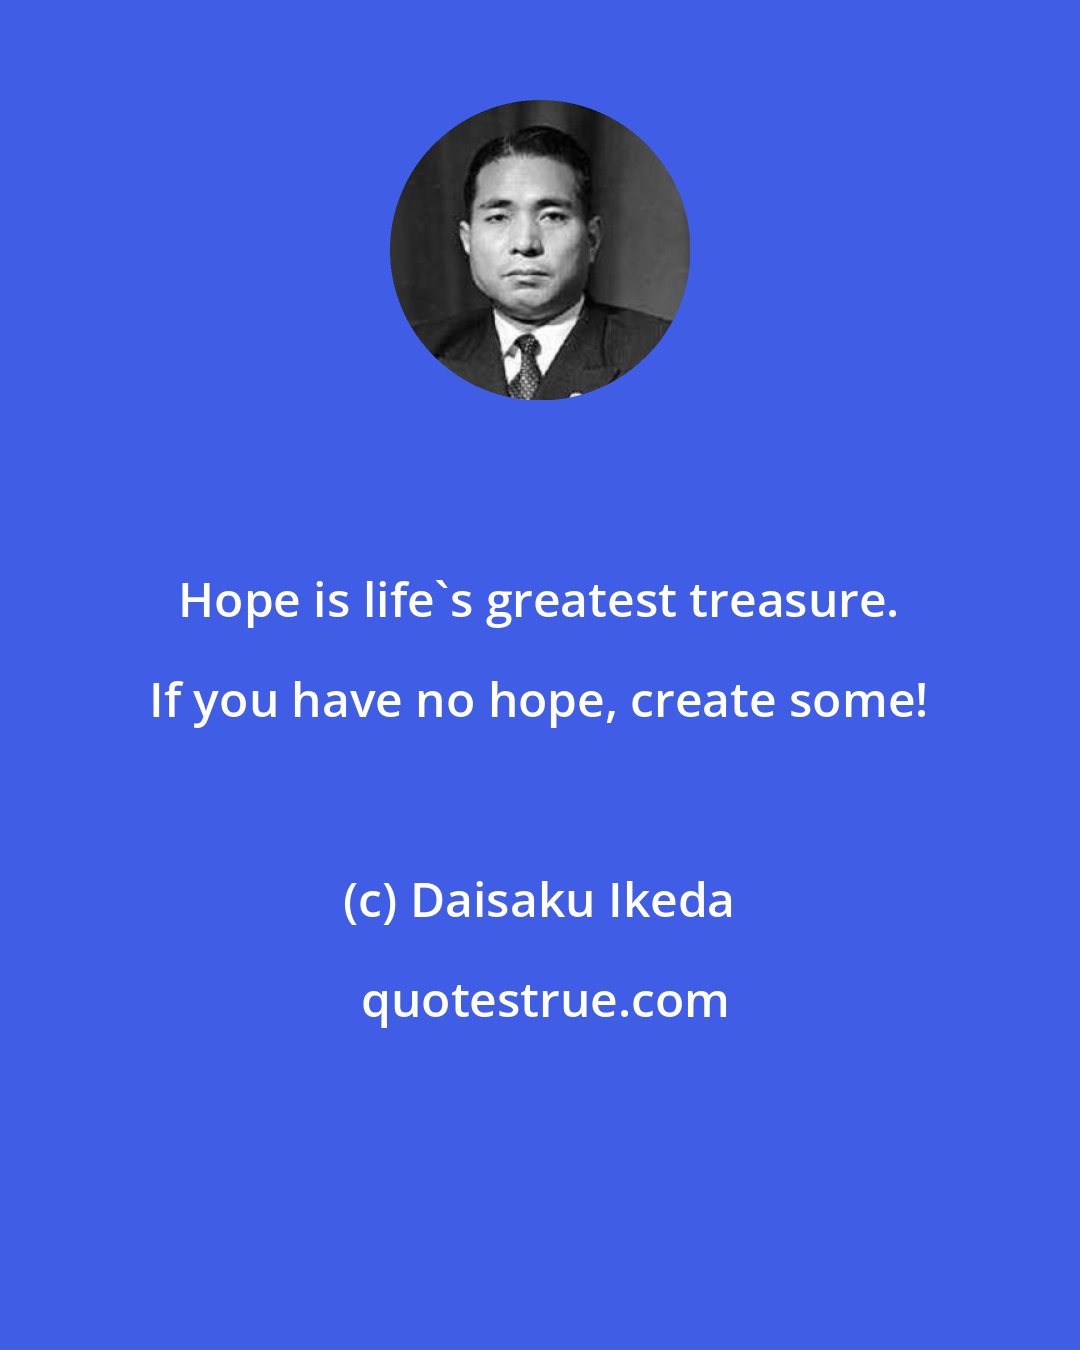 Daisaku Ikeda: Hope is life's greatest treasure. If you have no hope, create some!